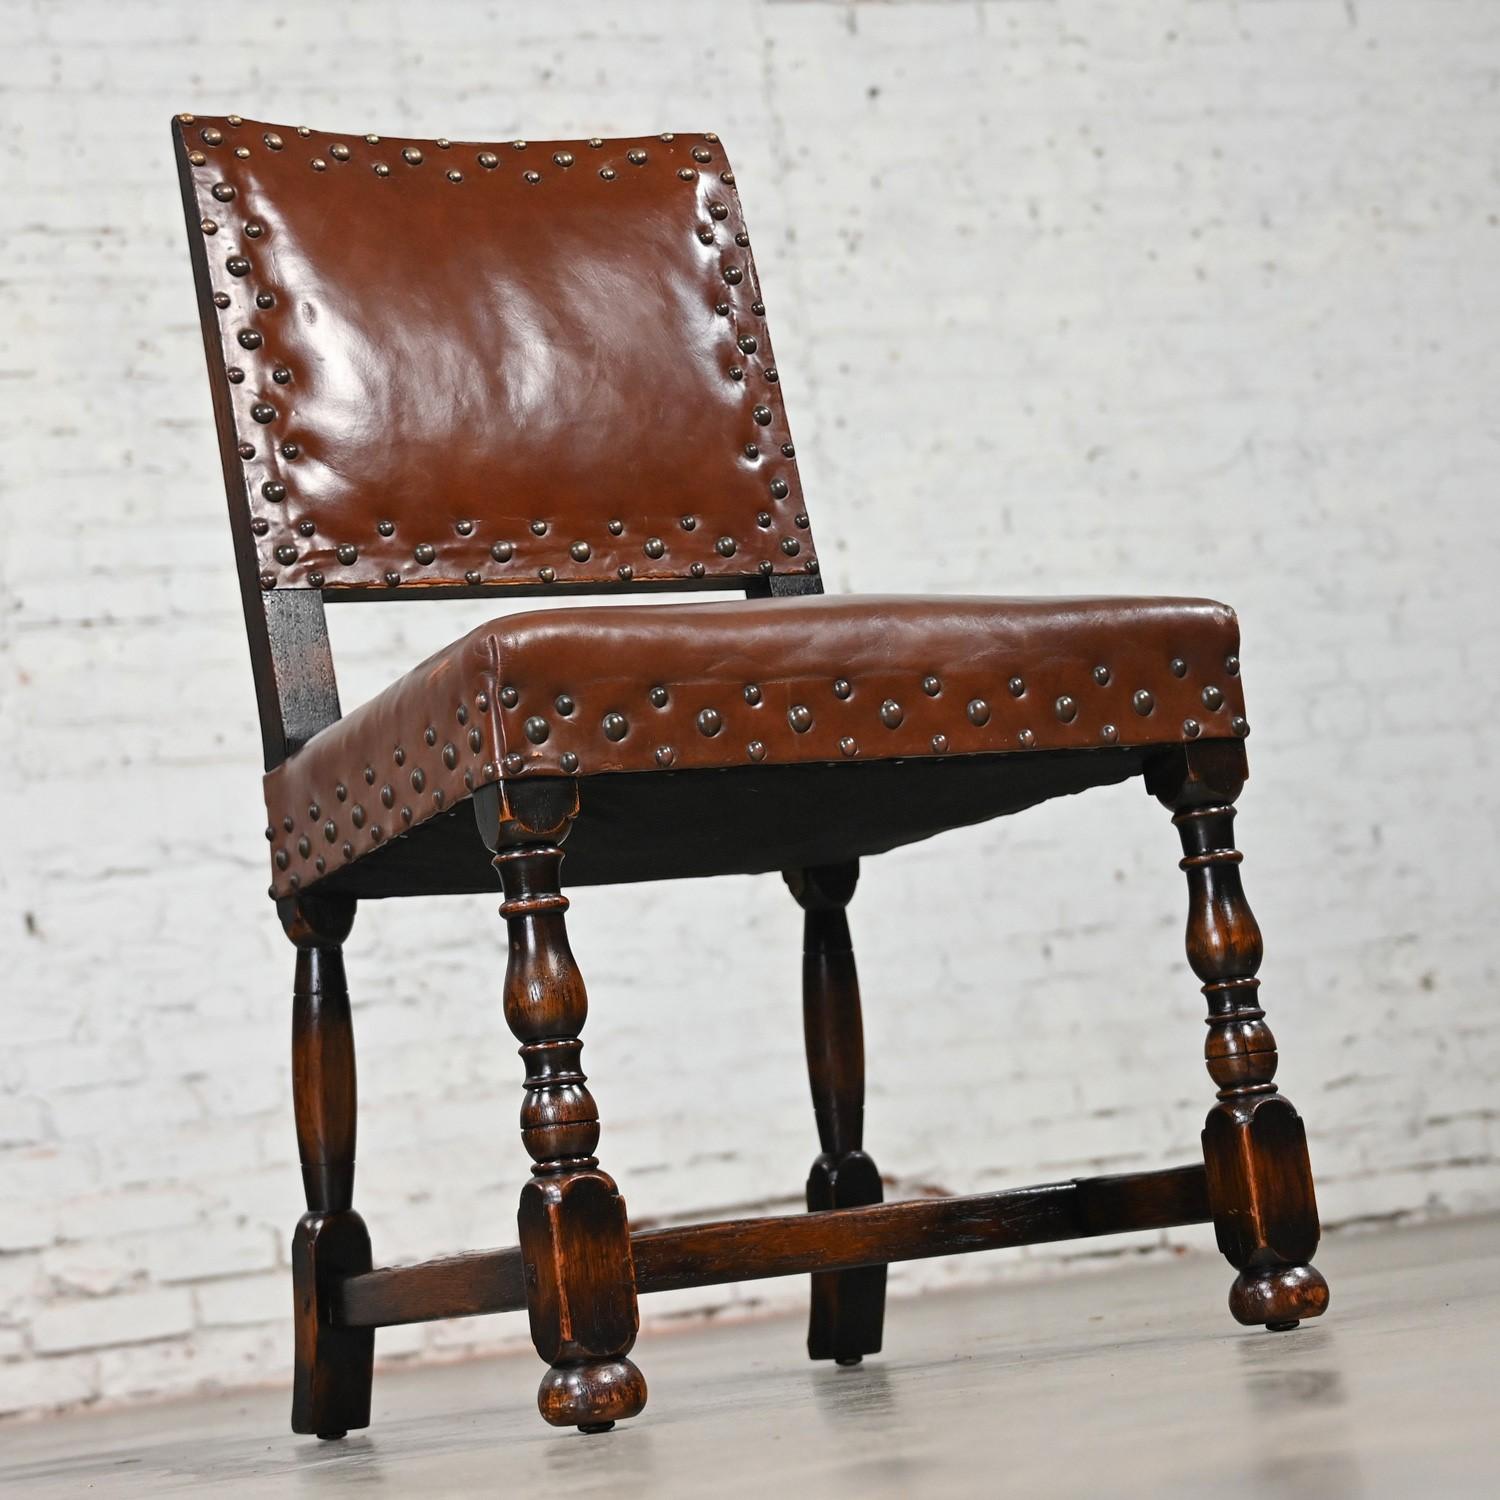 Spanish Revival Century Furniture Oak Side Chair Cognac Leather Nailhead Details For Sale 2